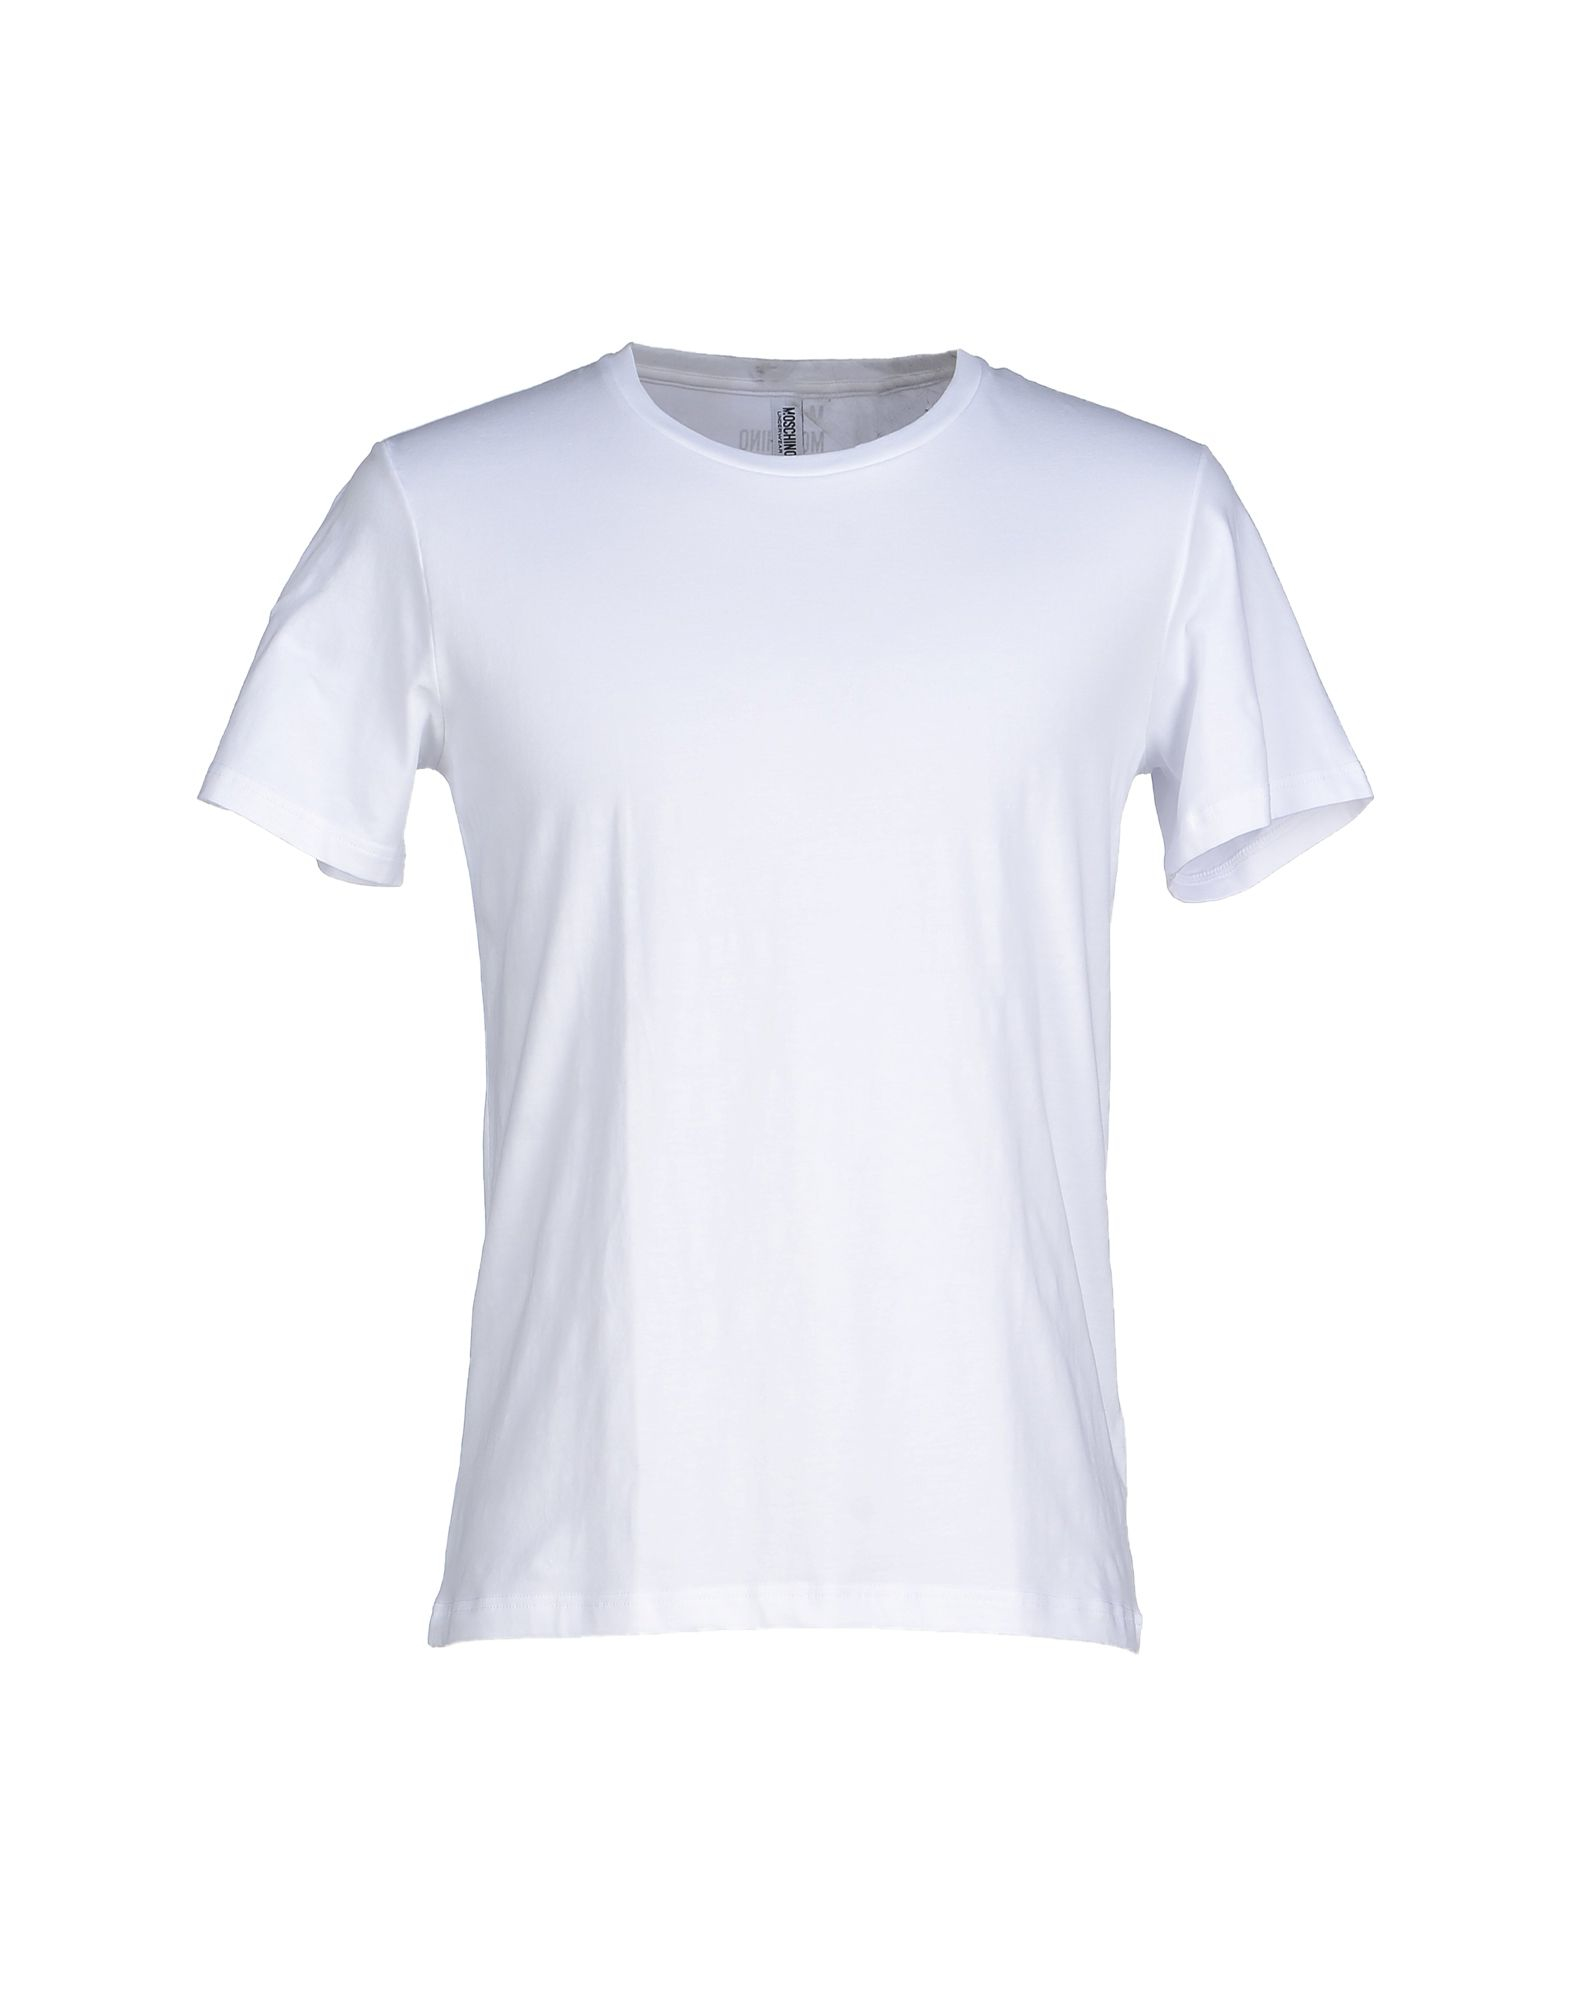 Moschino Undershirt in White for Men - Lyst